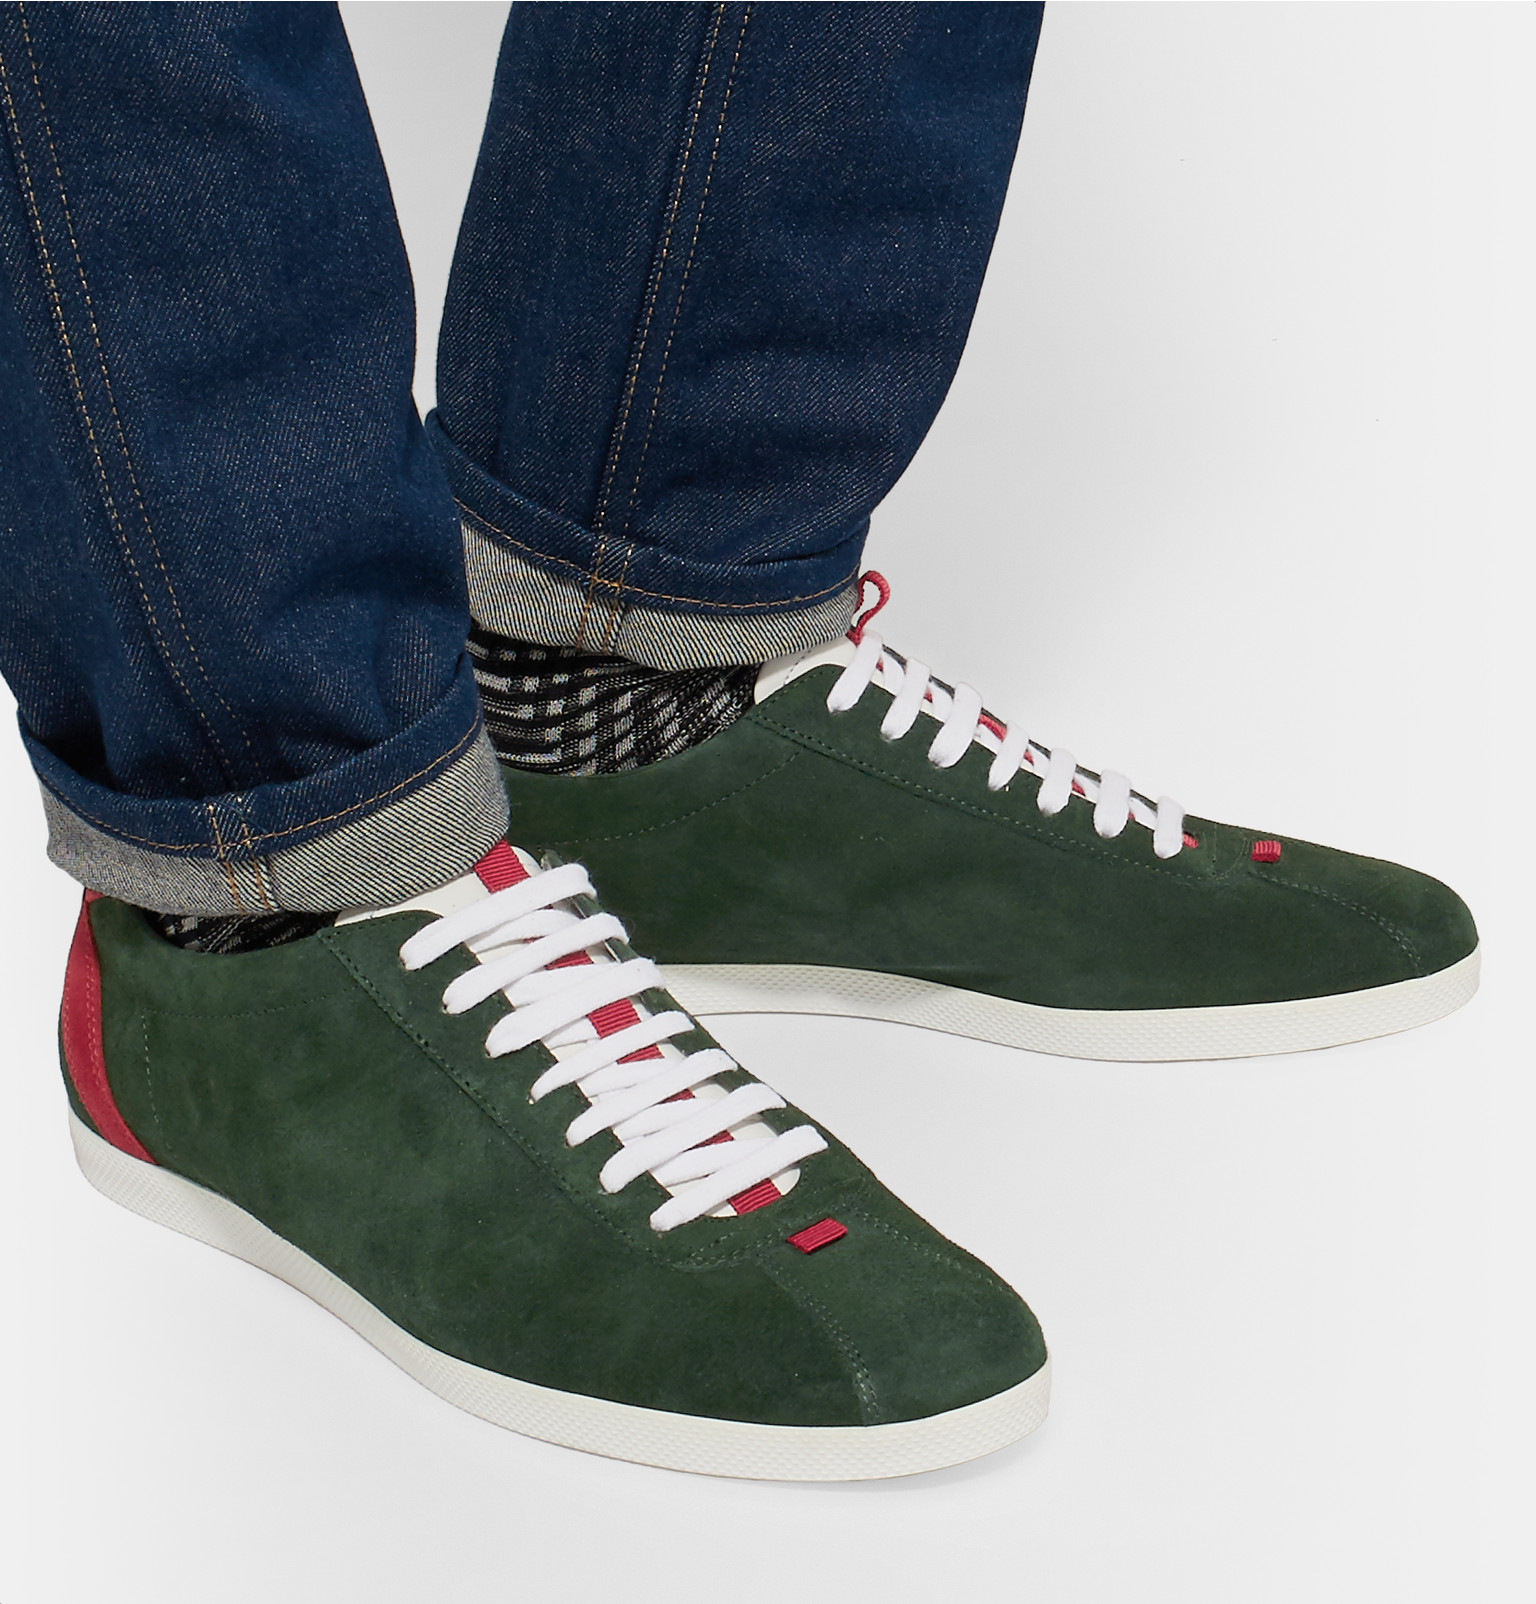 Gucci Suede Tennis Sneakers in Dark Green (Green) for Men